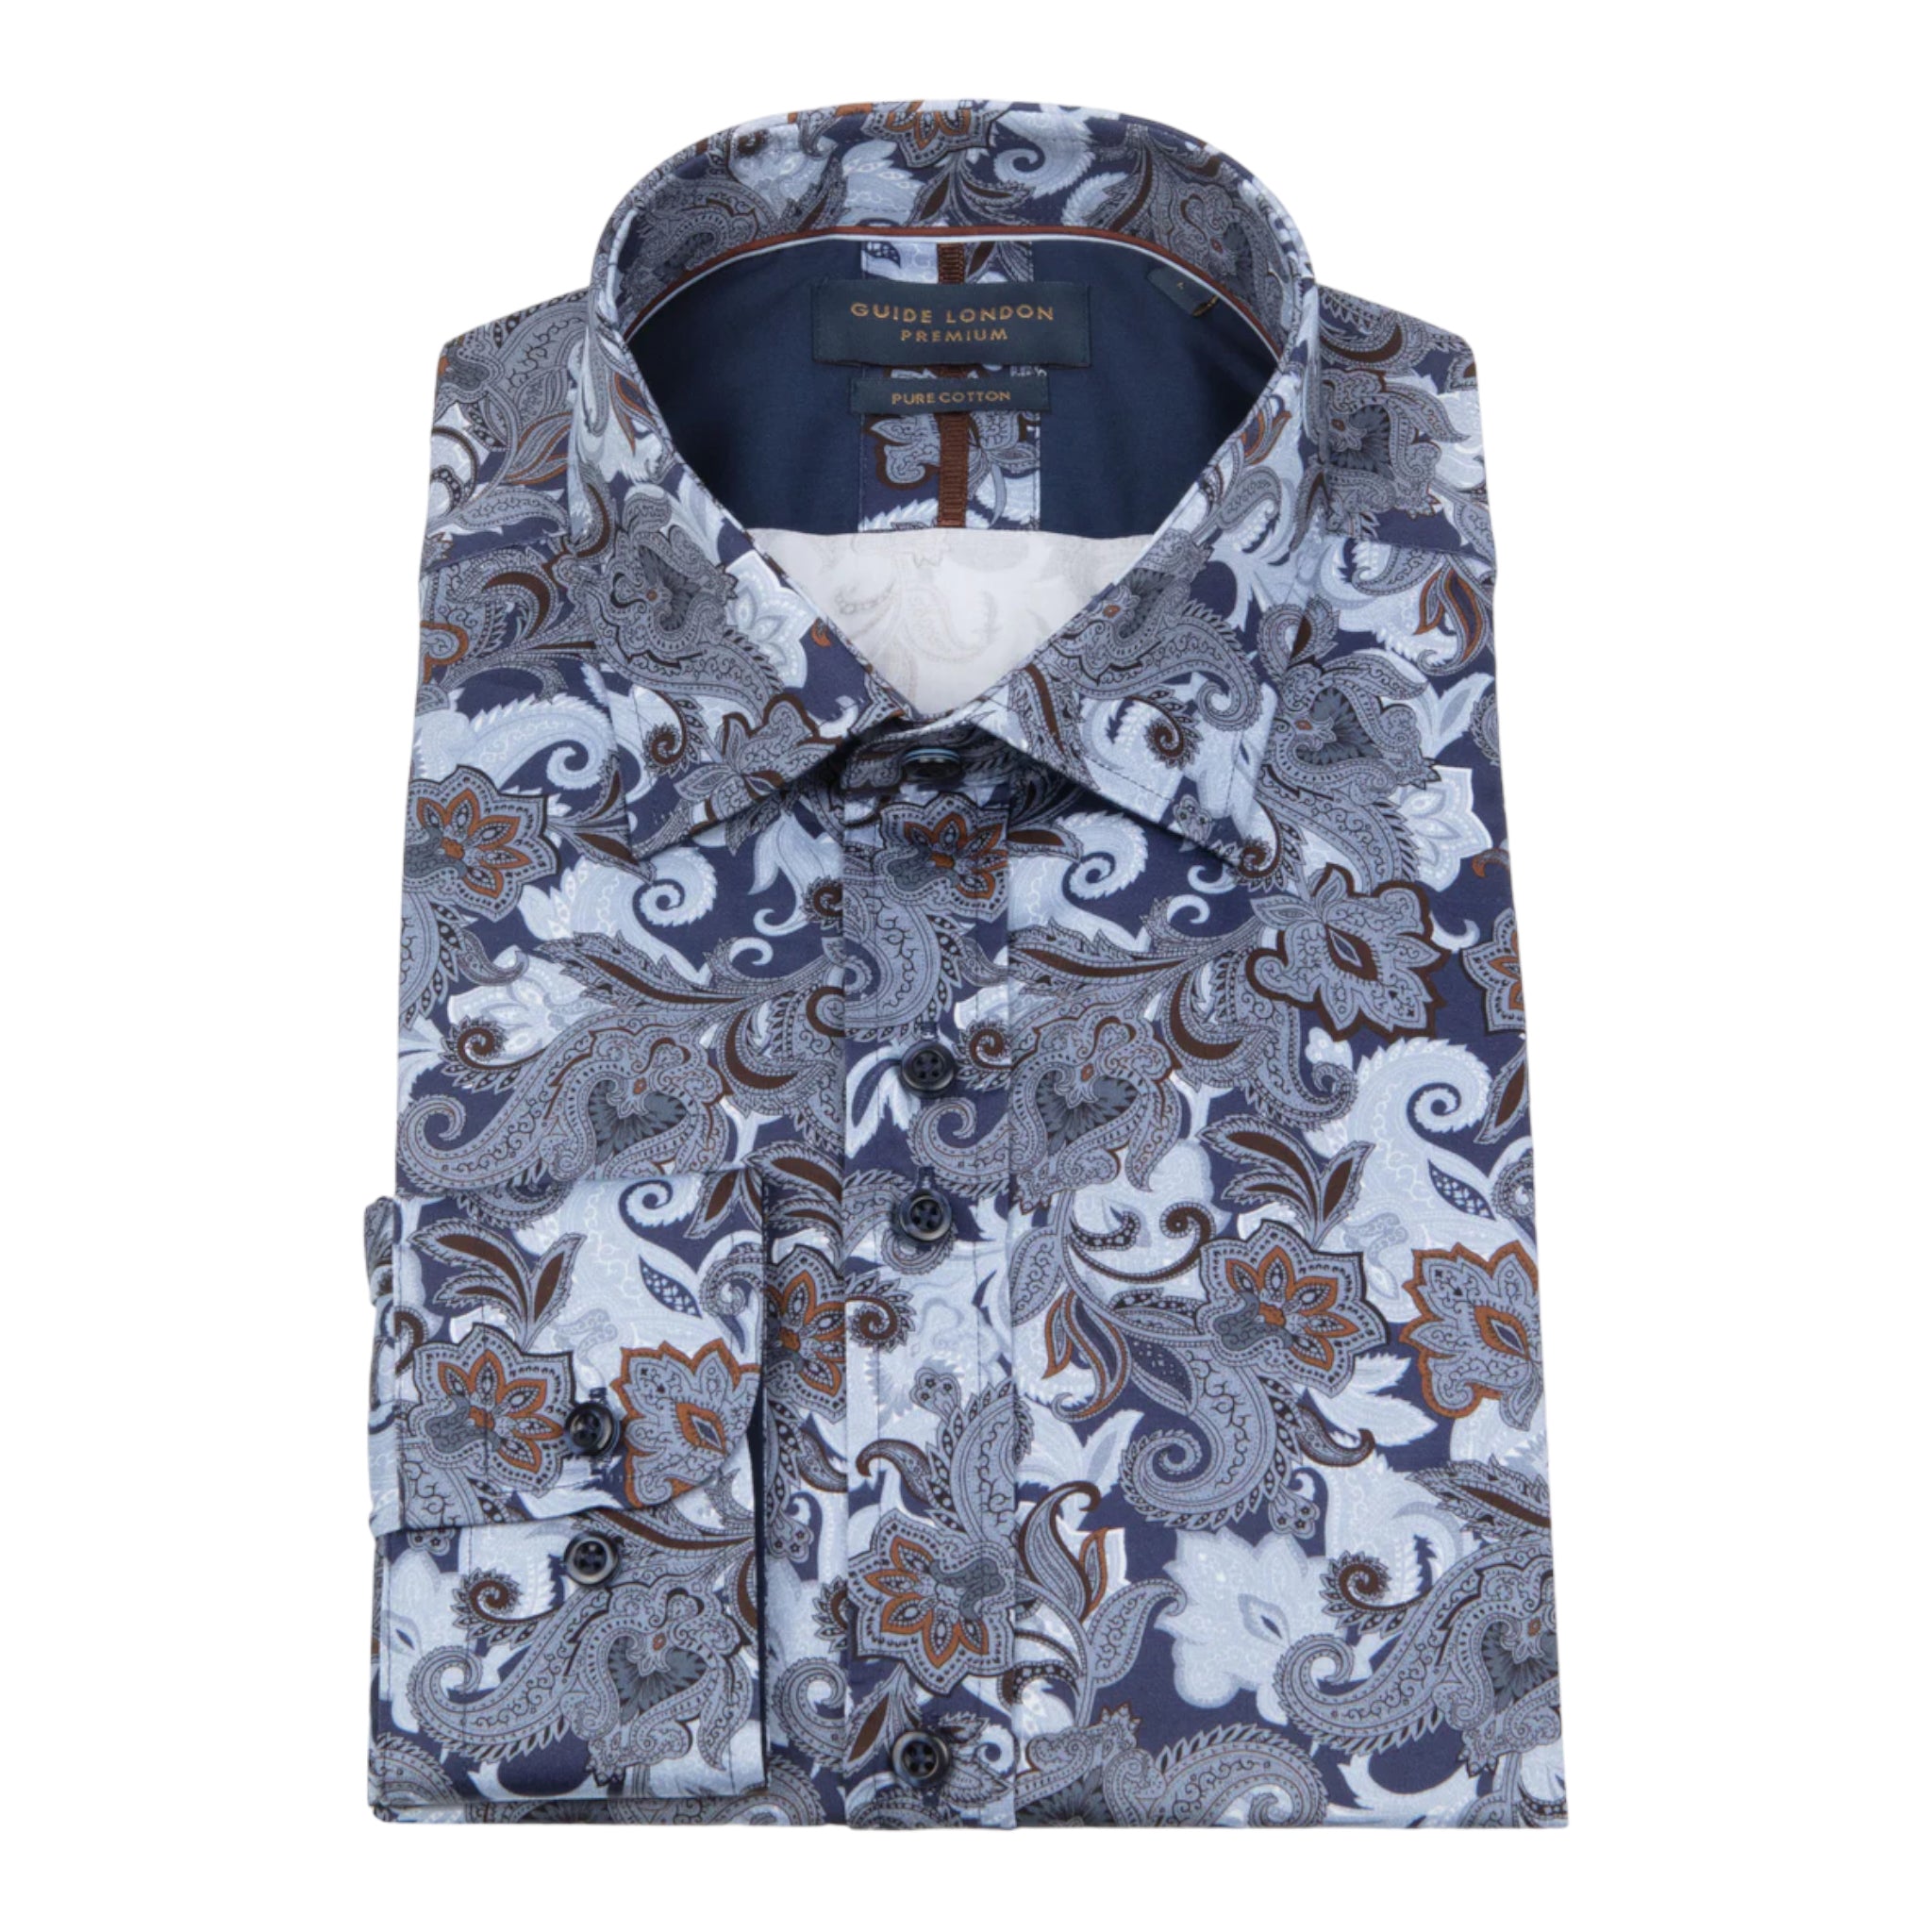 Guide London LS76662 Blue & Brown Paisley Premium Cotton Long Sleeve Shirt